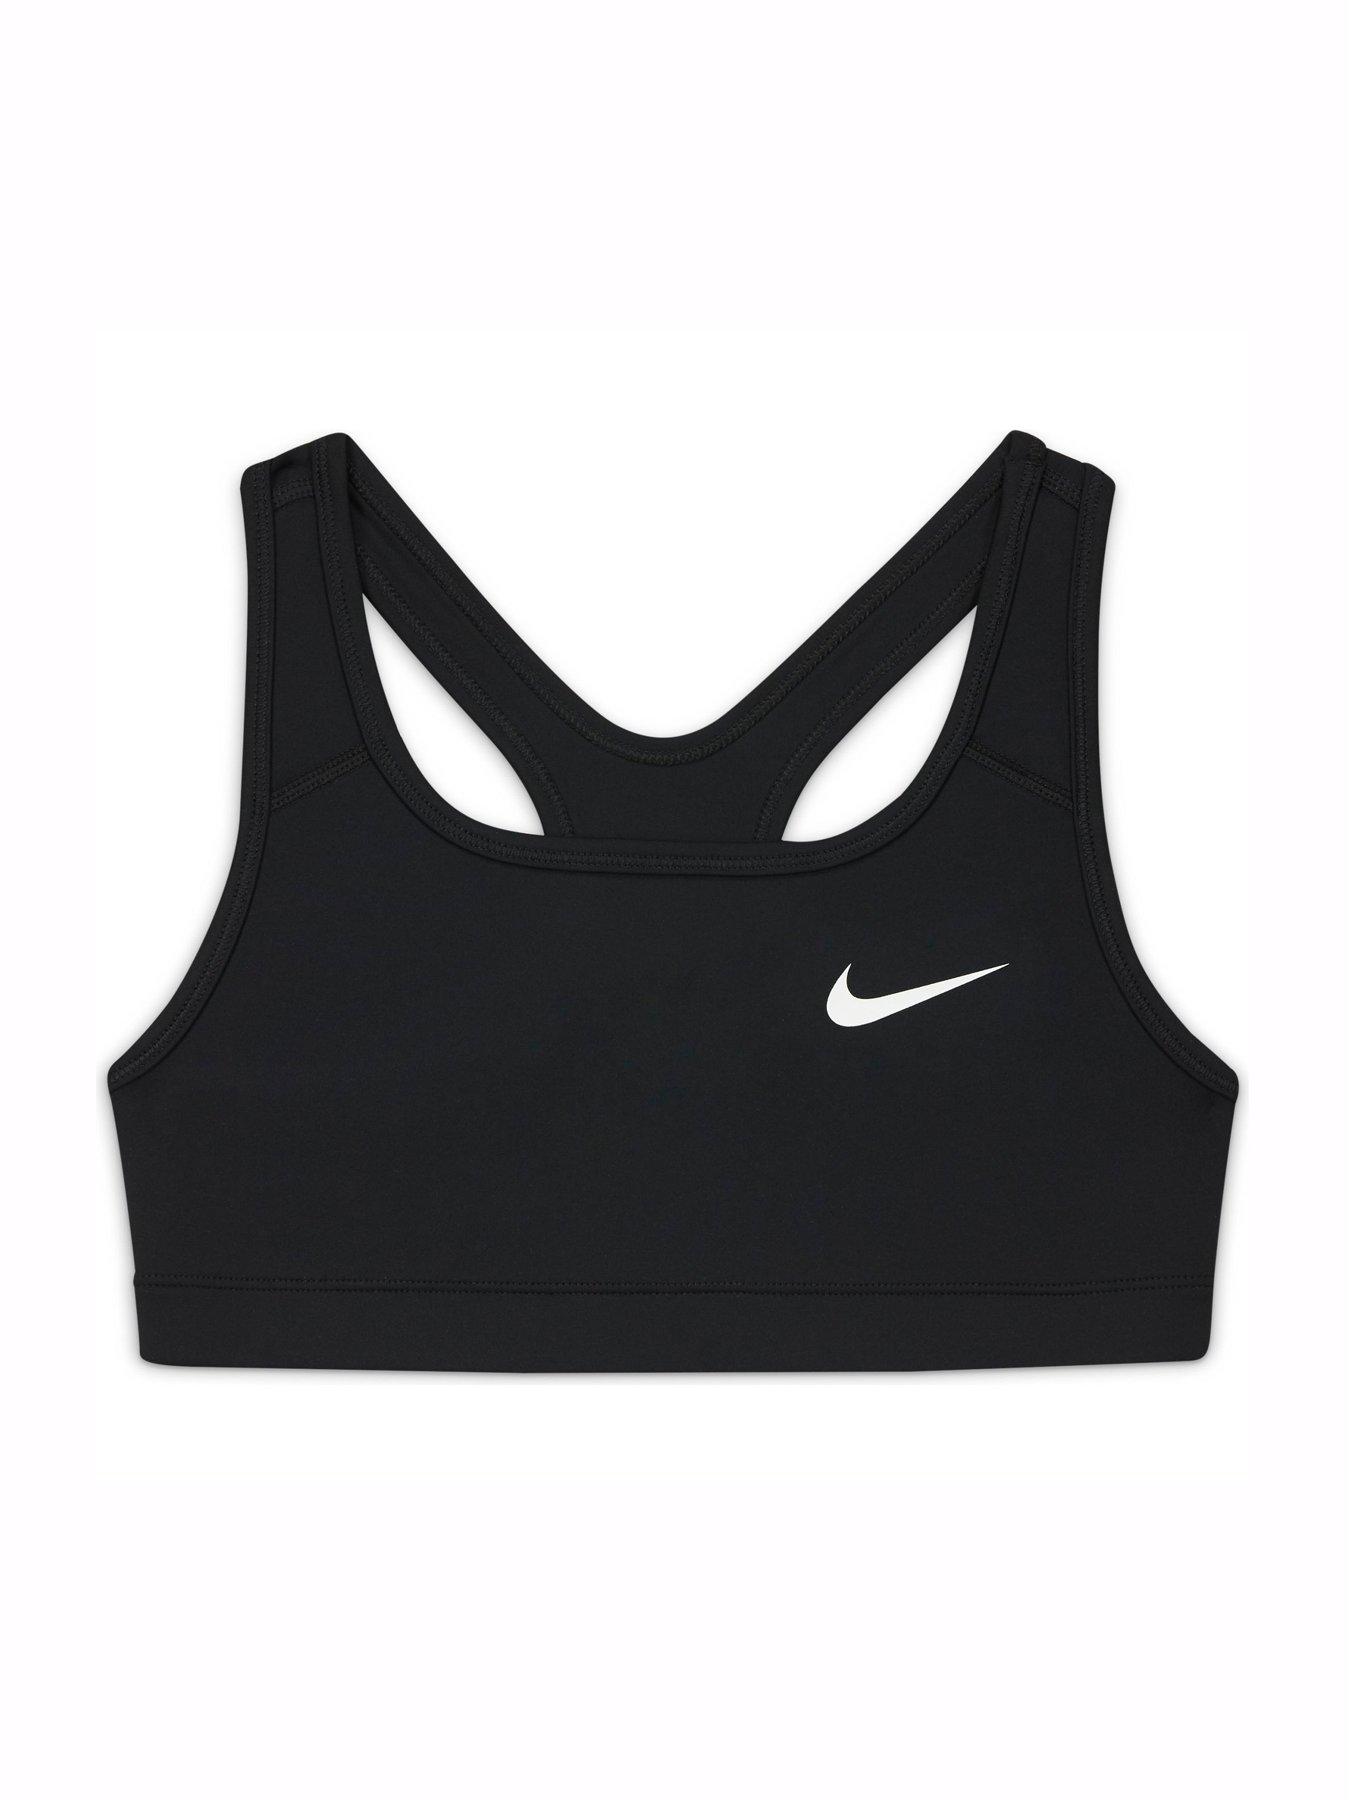 Nike, Sports bras, Kids & baby sports clothing, Sports & leisure